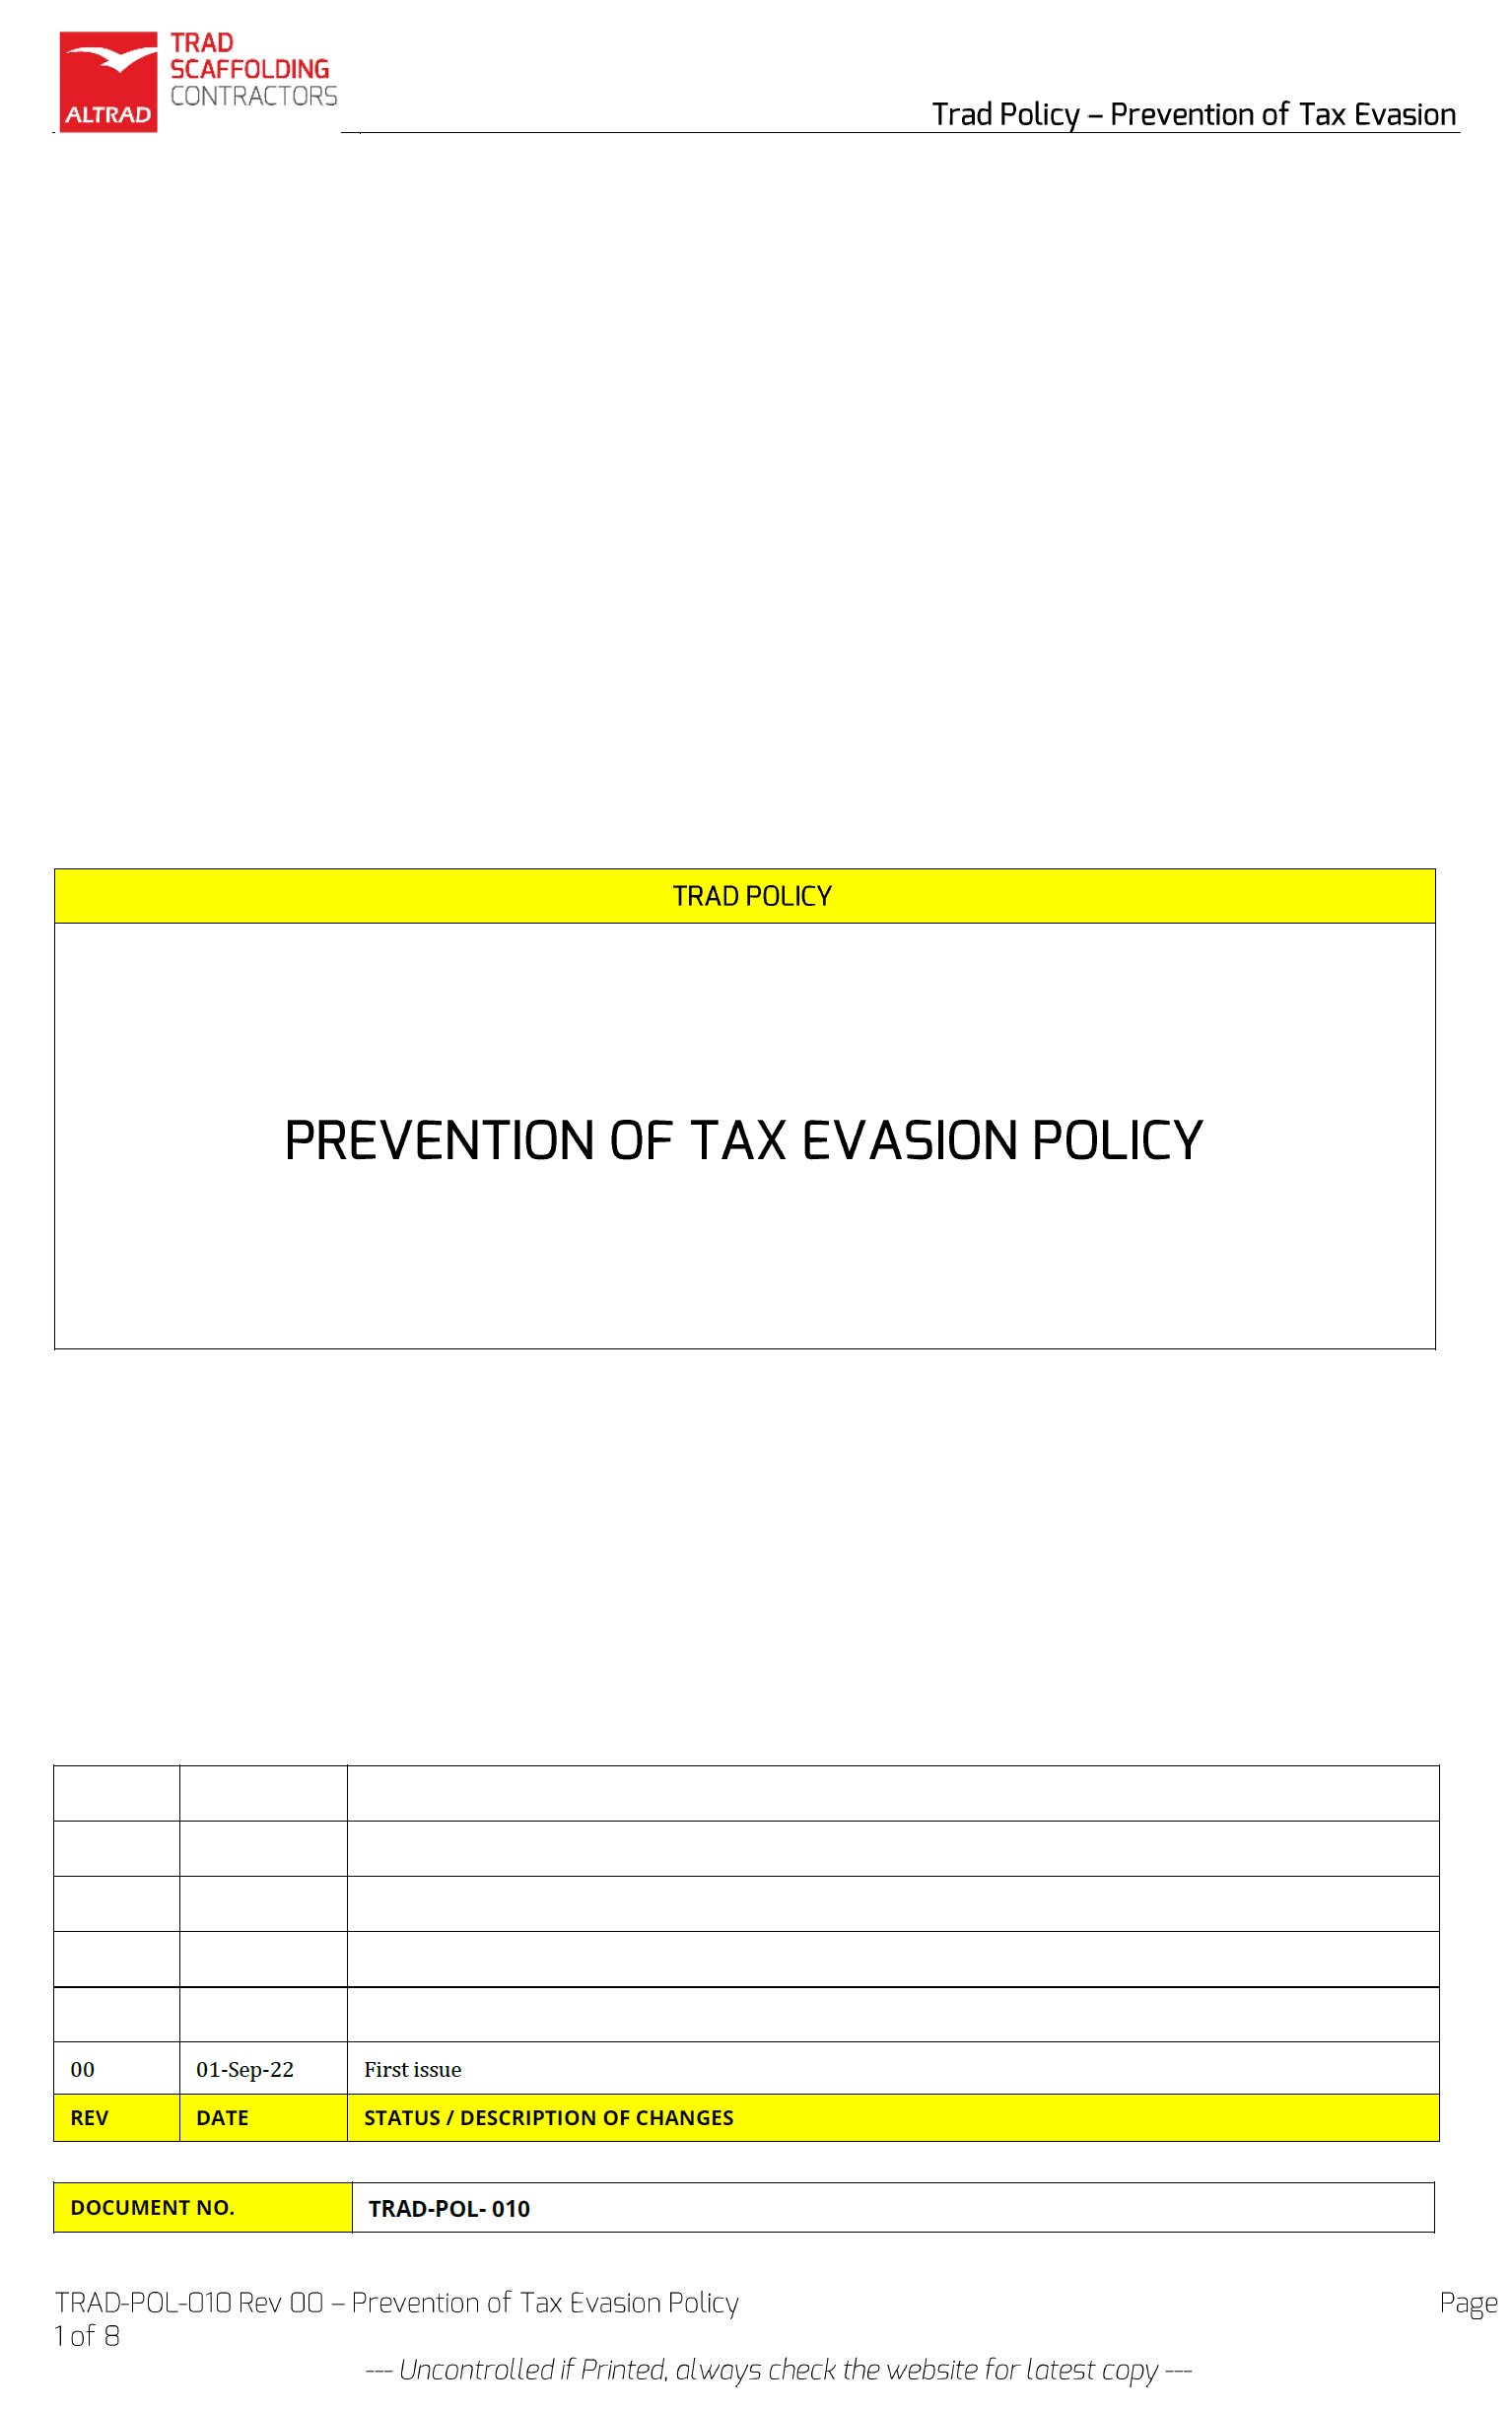 Prevention of Tax Evasion